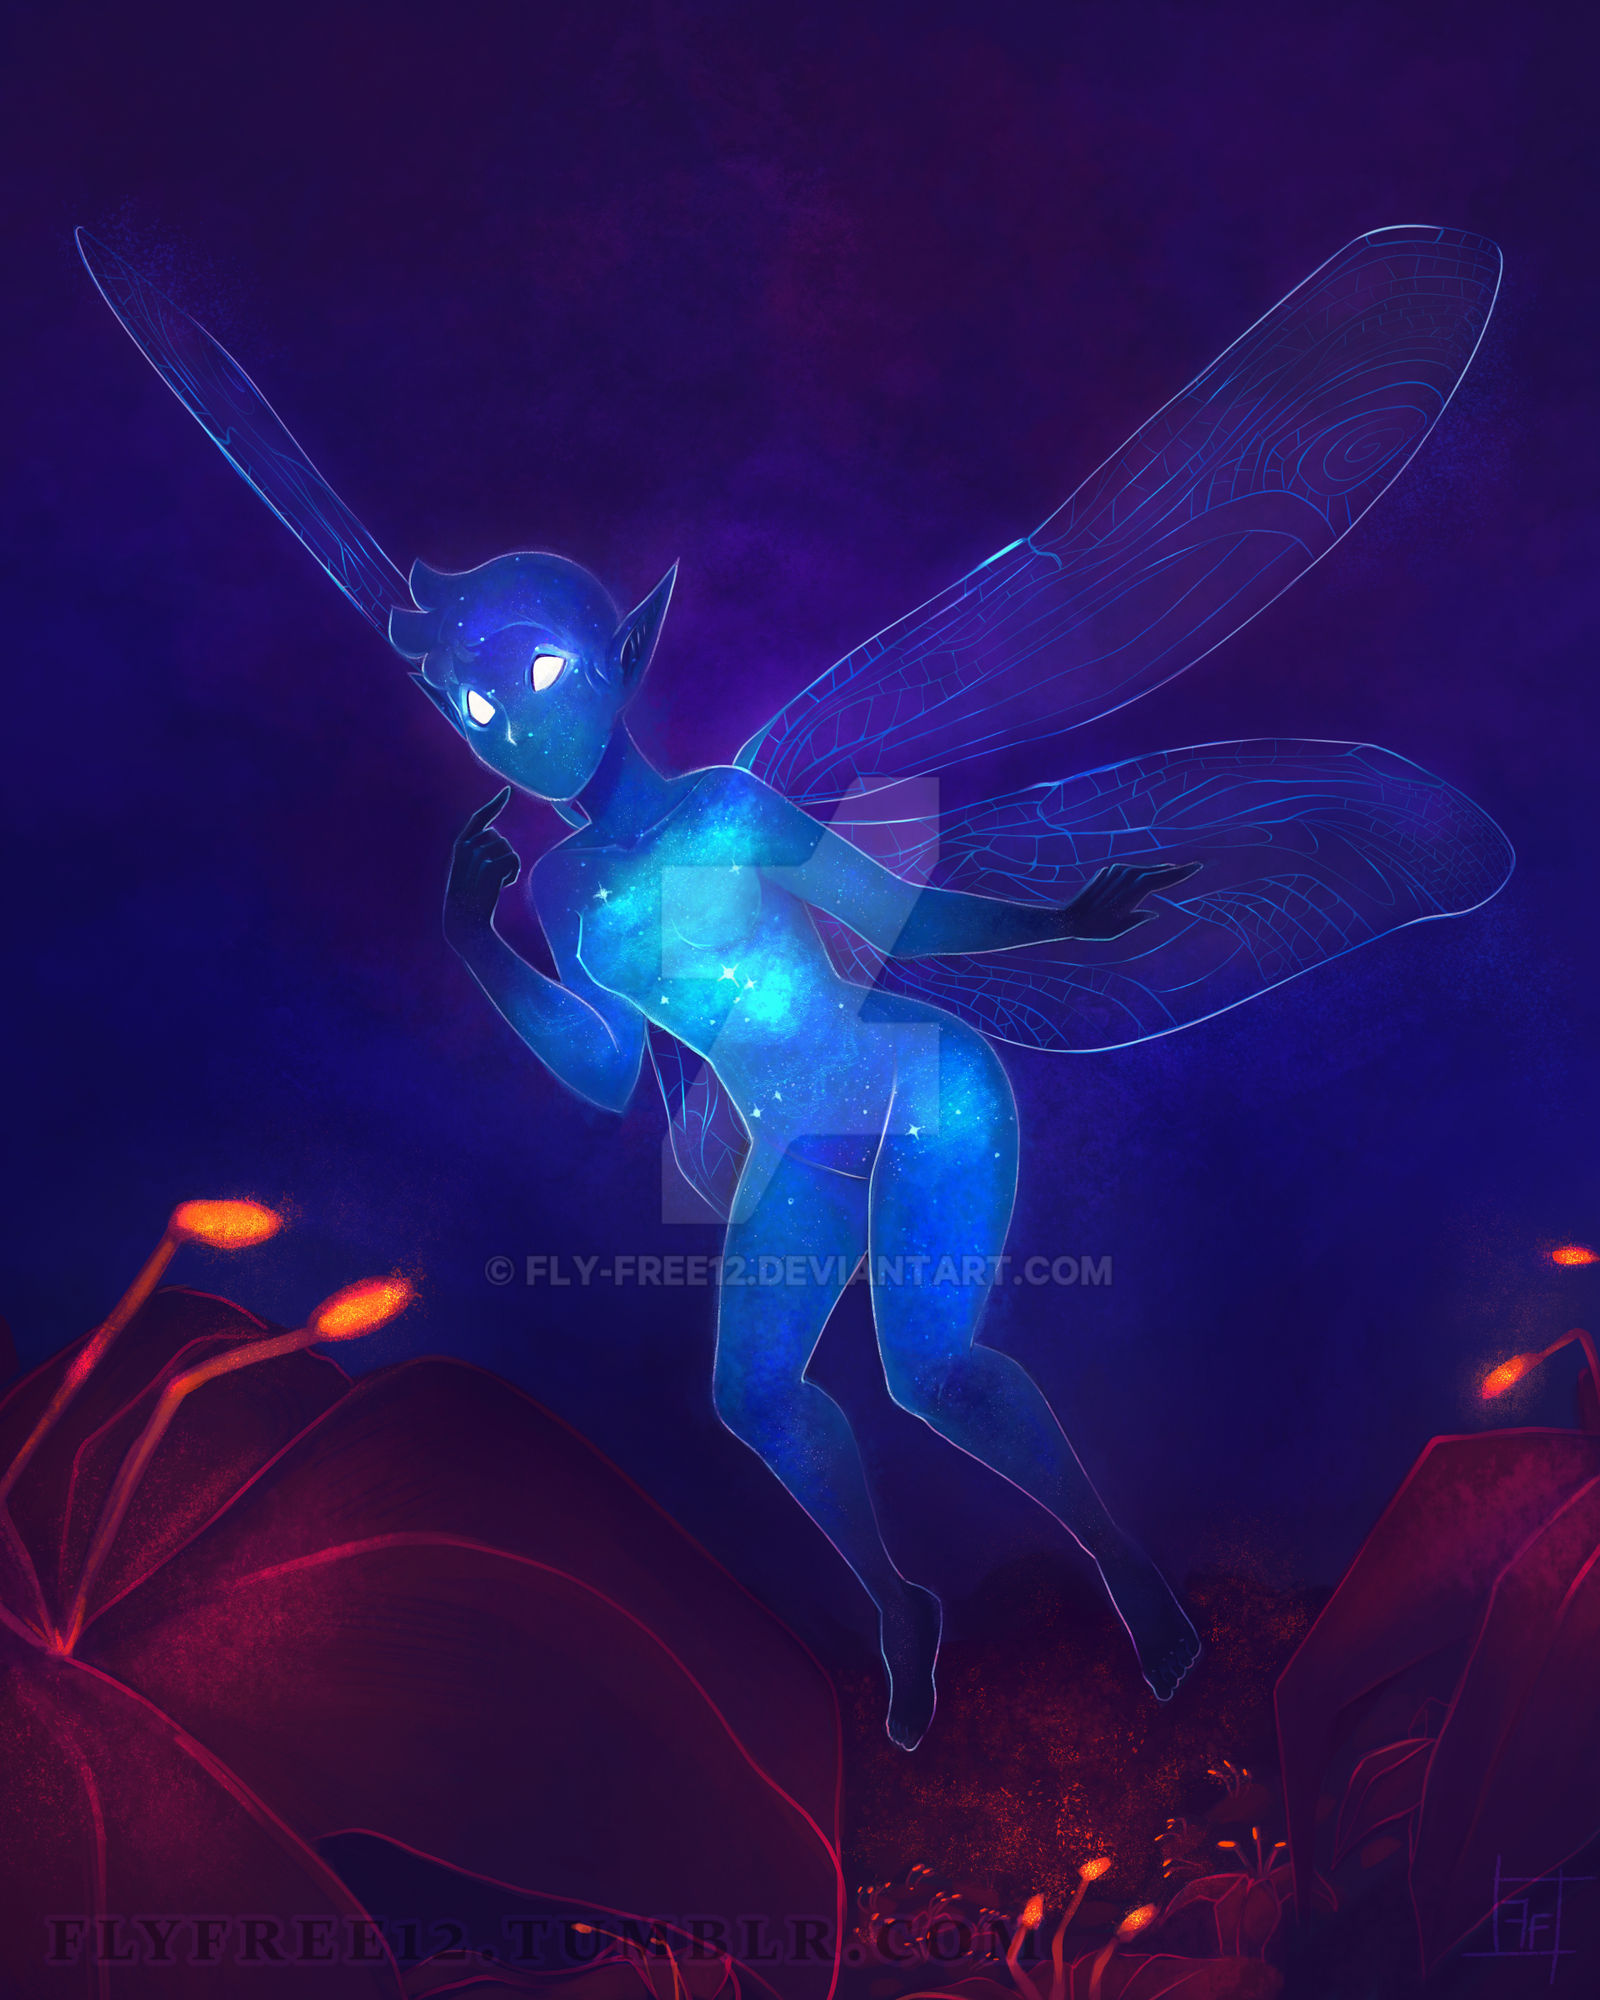 Galaxy Fairy by Fly-Free12 on DeviantArt